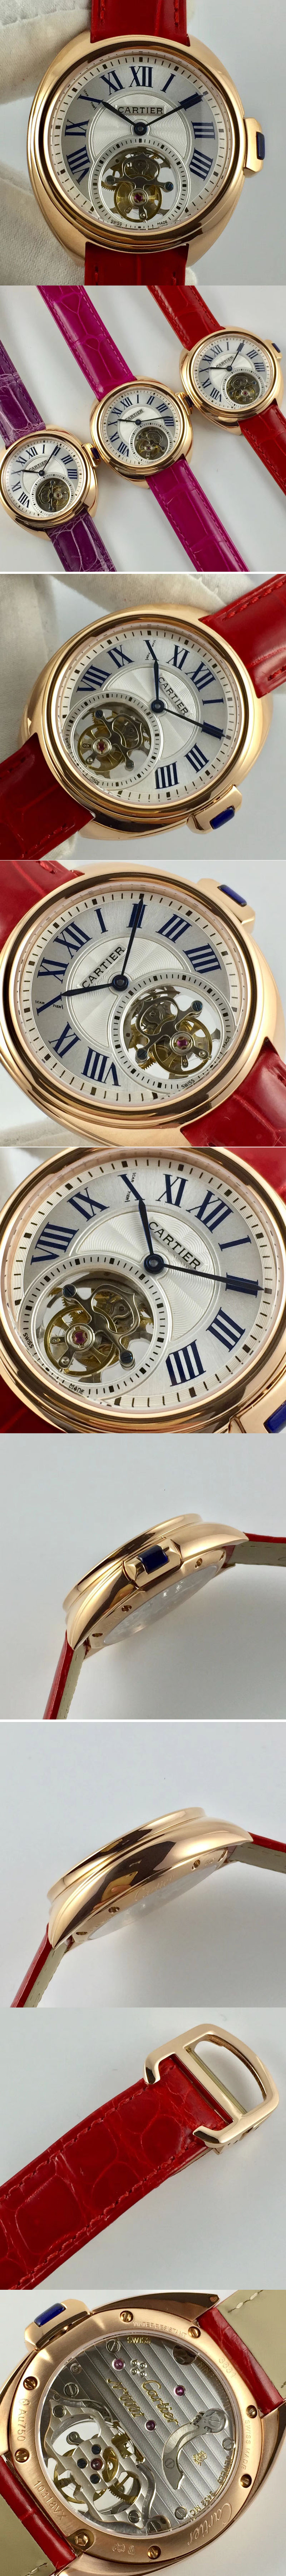 Replica Cartier Watches